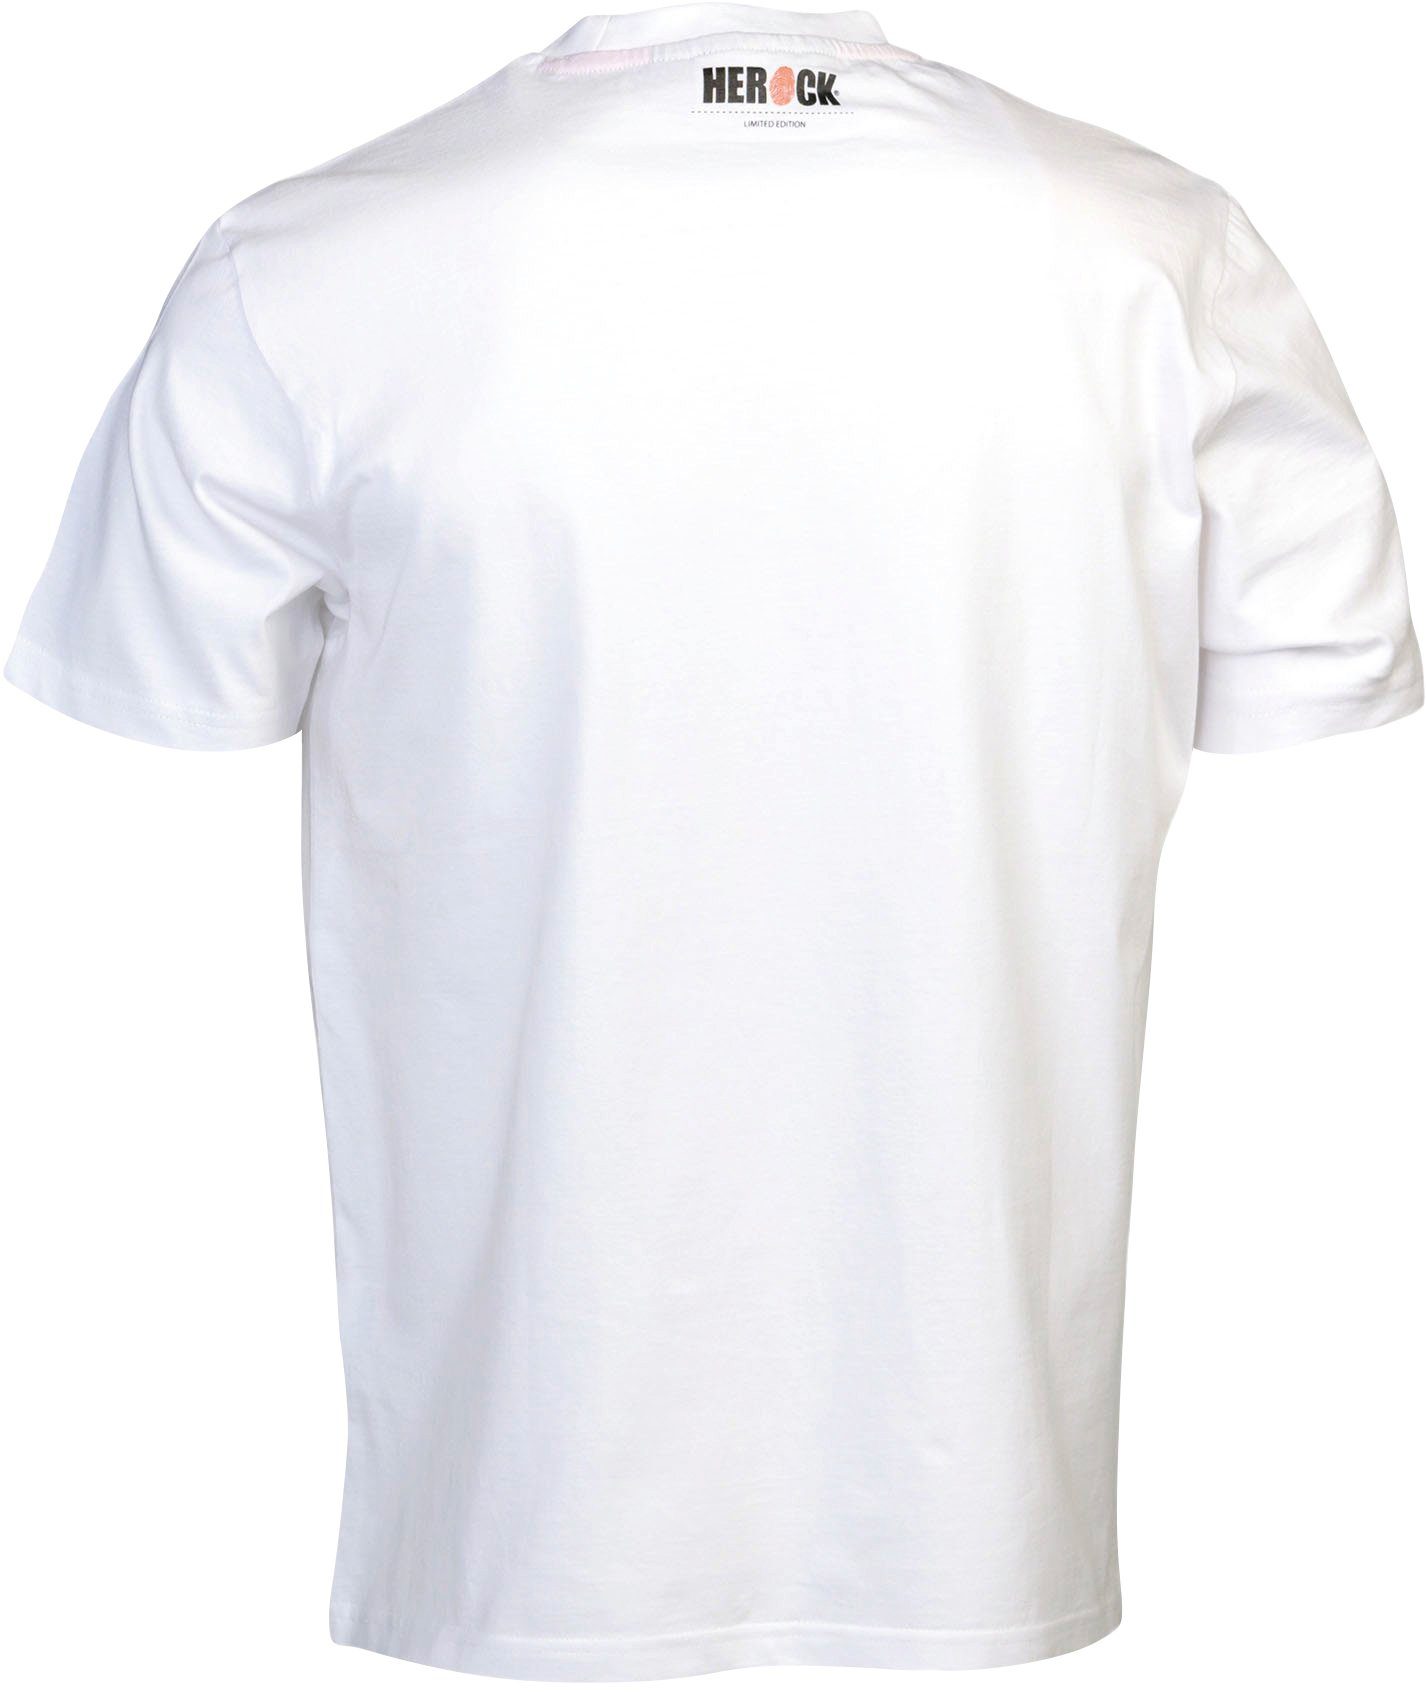 Herock T-Shirt Burst Mit kurzen Ärmeln, Herock®-Aufdruck Rundhalsausschnitt